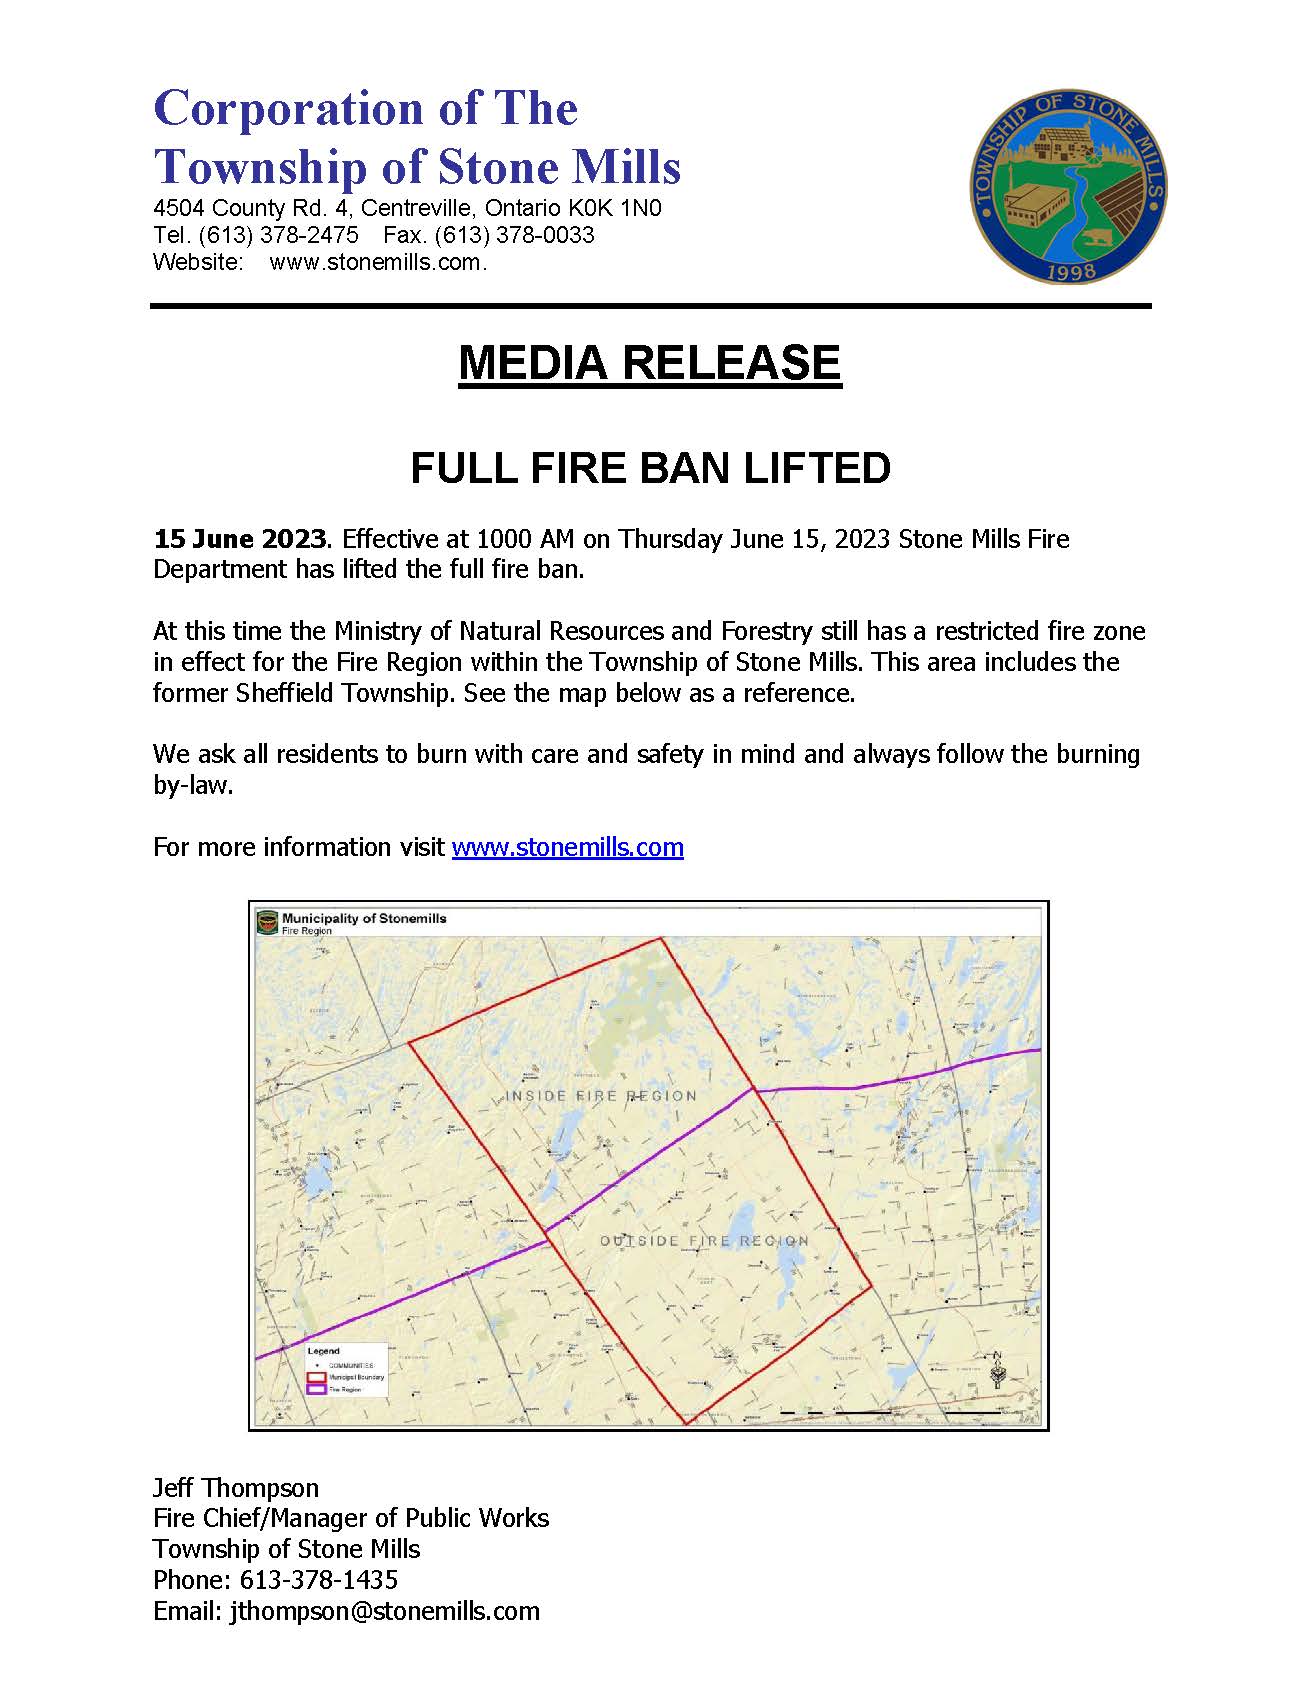 fire ban lifting